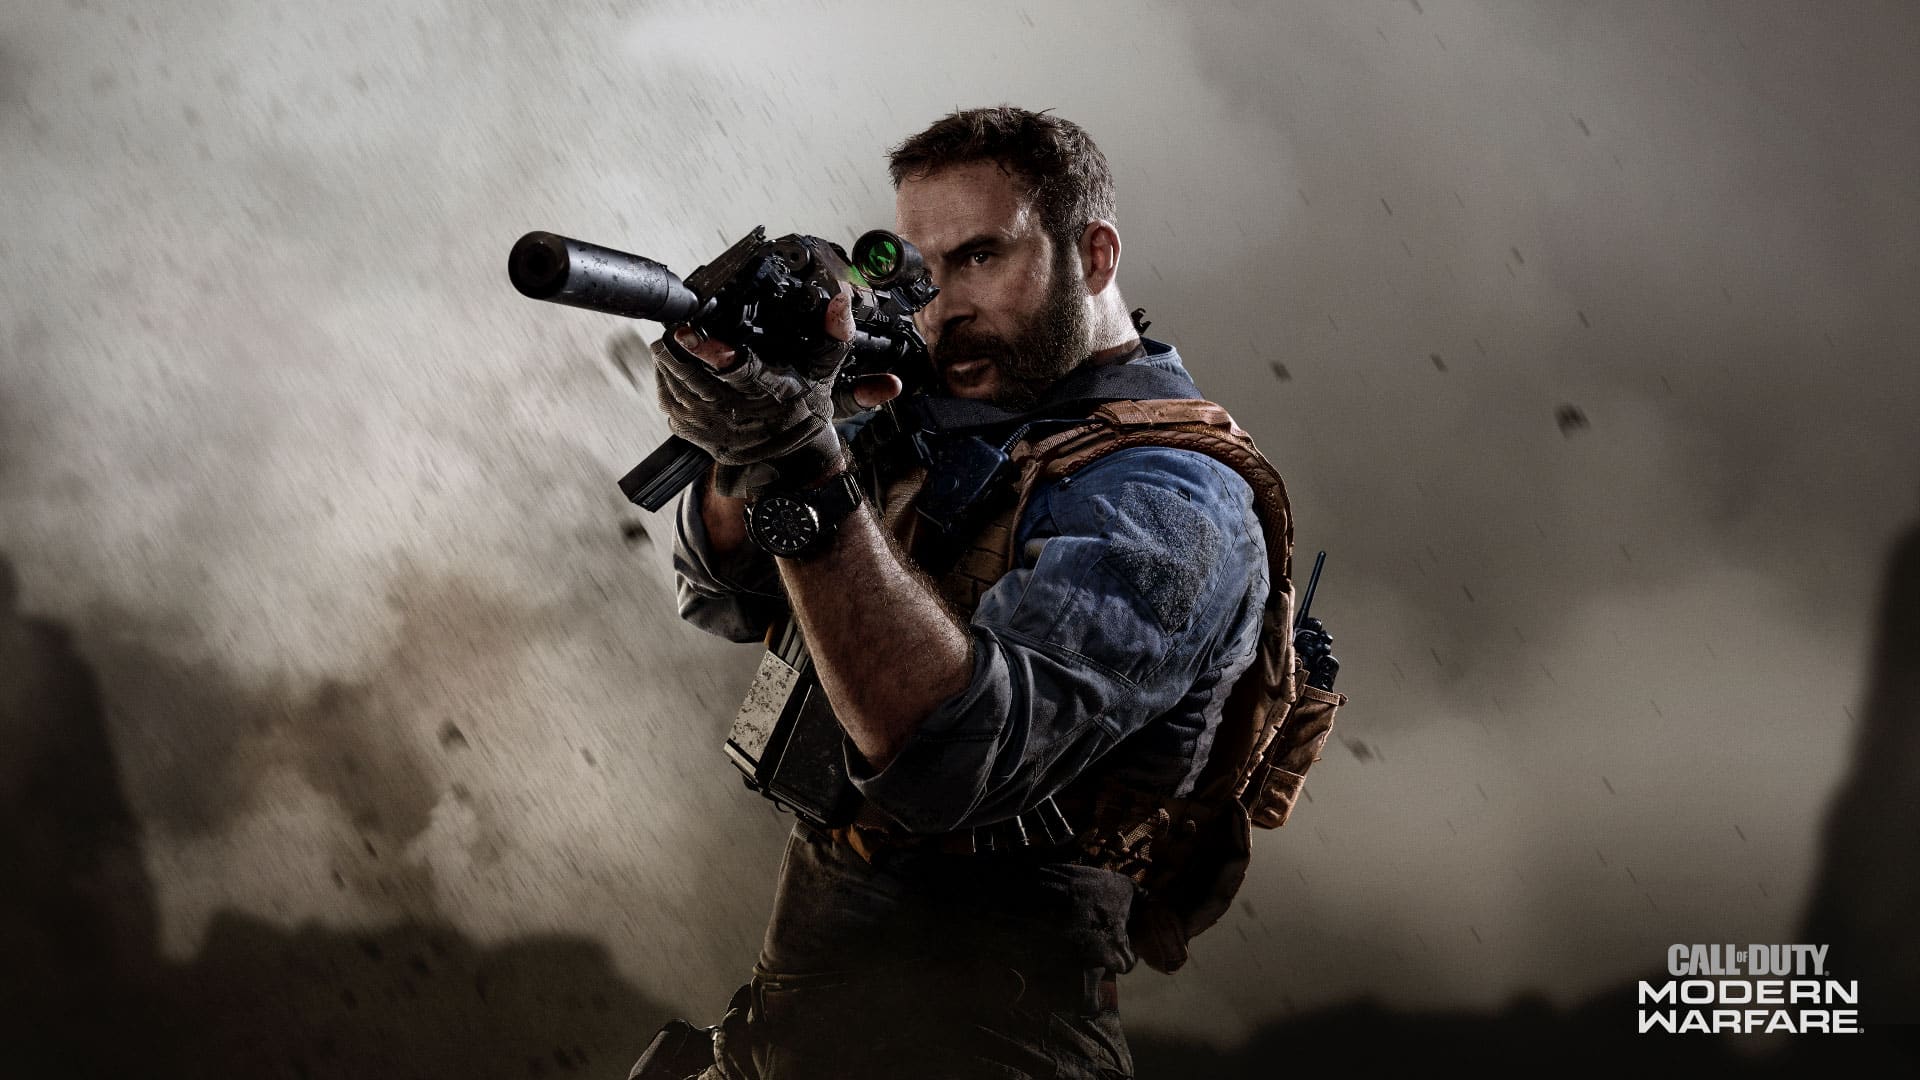 Call of Duty: Modern Warfare free maps hardpoint new update